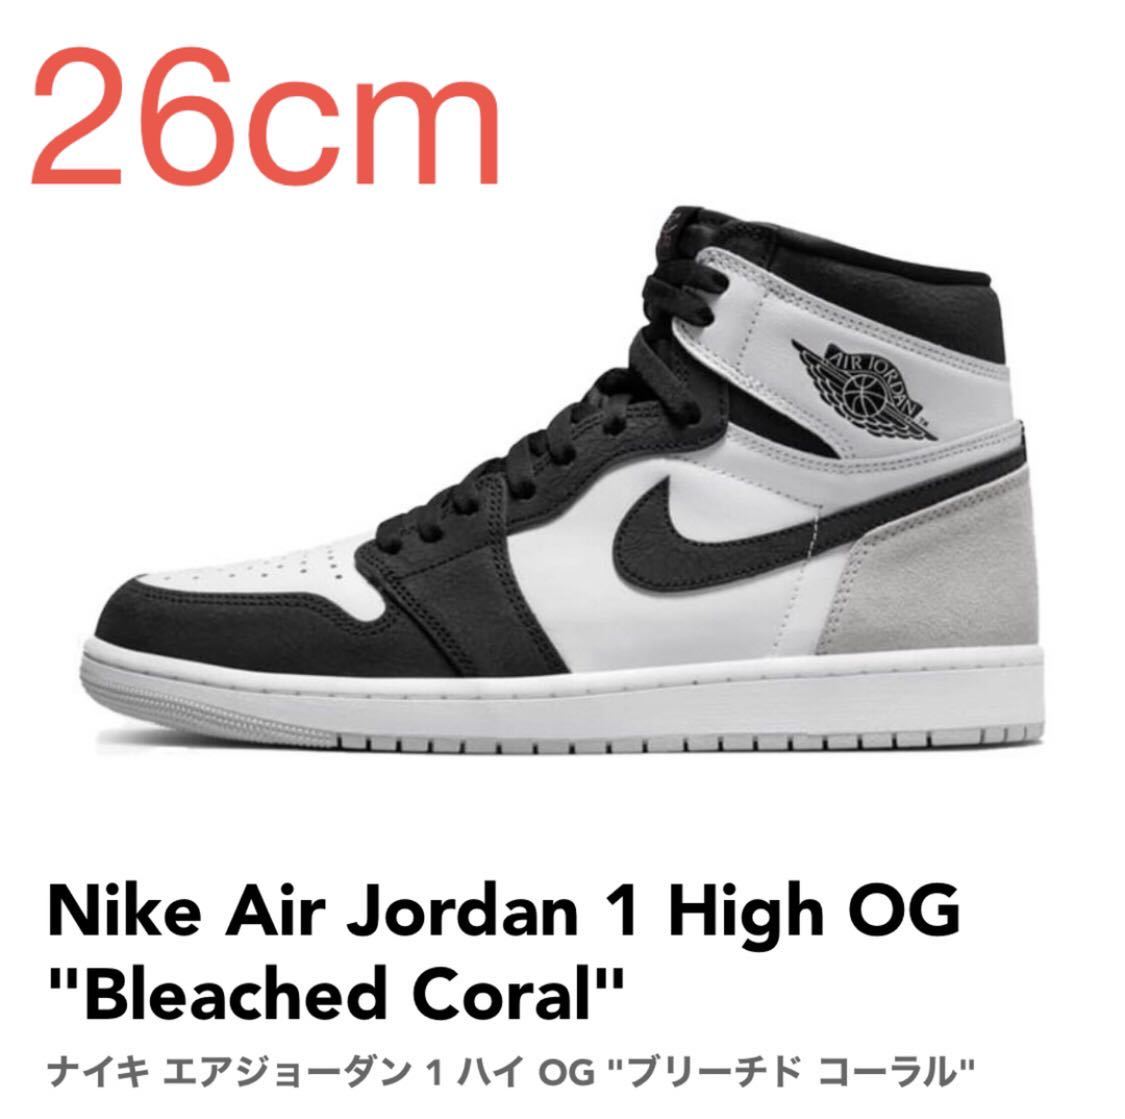 Nike Air Jordan 1 High OG Bleached Coral ナイキ エアジョーダン 1 ハイ OG ブリーチド コーラル 555088-108 26cm US8 新品